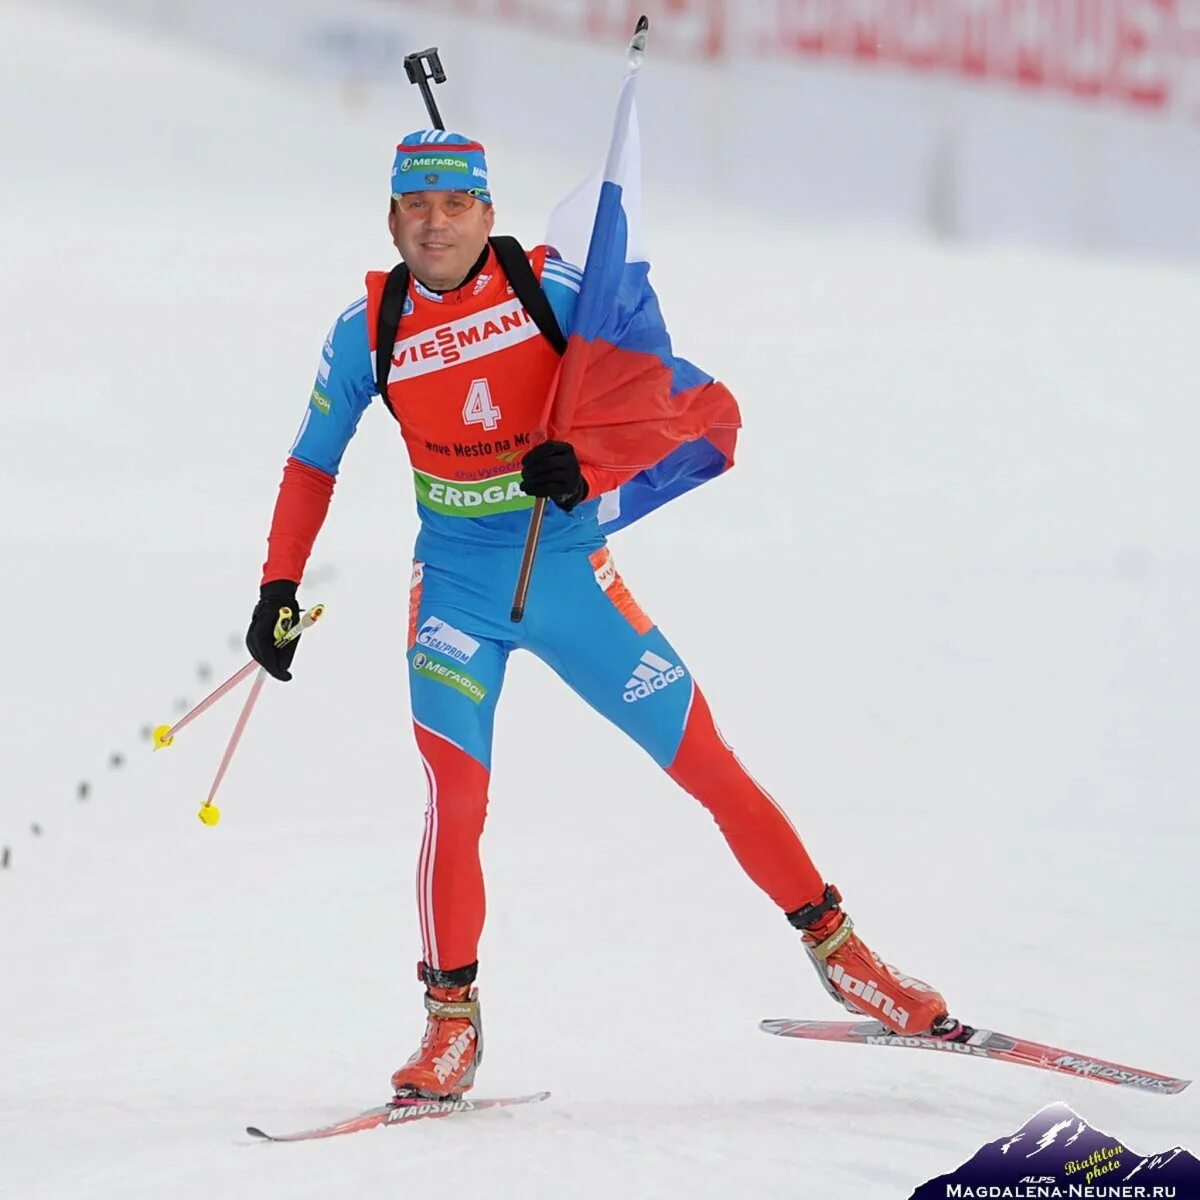 Магдалена Нойнер лыжники Германии. Зимний спорт биатлон. Лыжи для биатлона. Виды лыжного спорта биатлон.